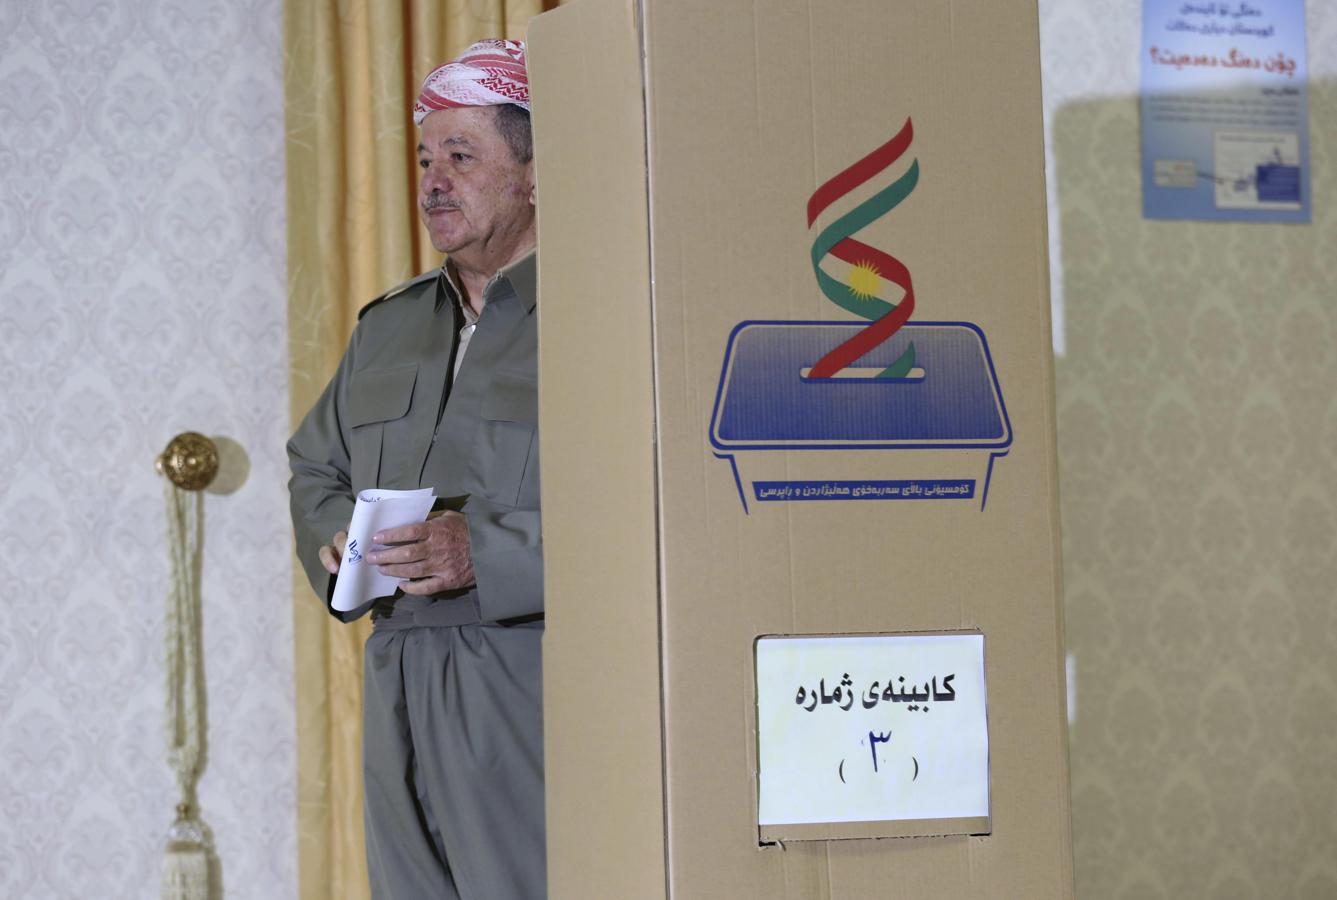 El presidente de la región autónoma del Kurdistán, Masud Barzani, tras depositar su voto. 